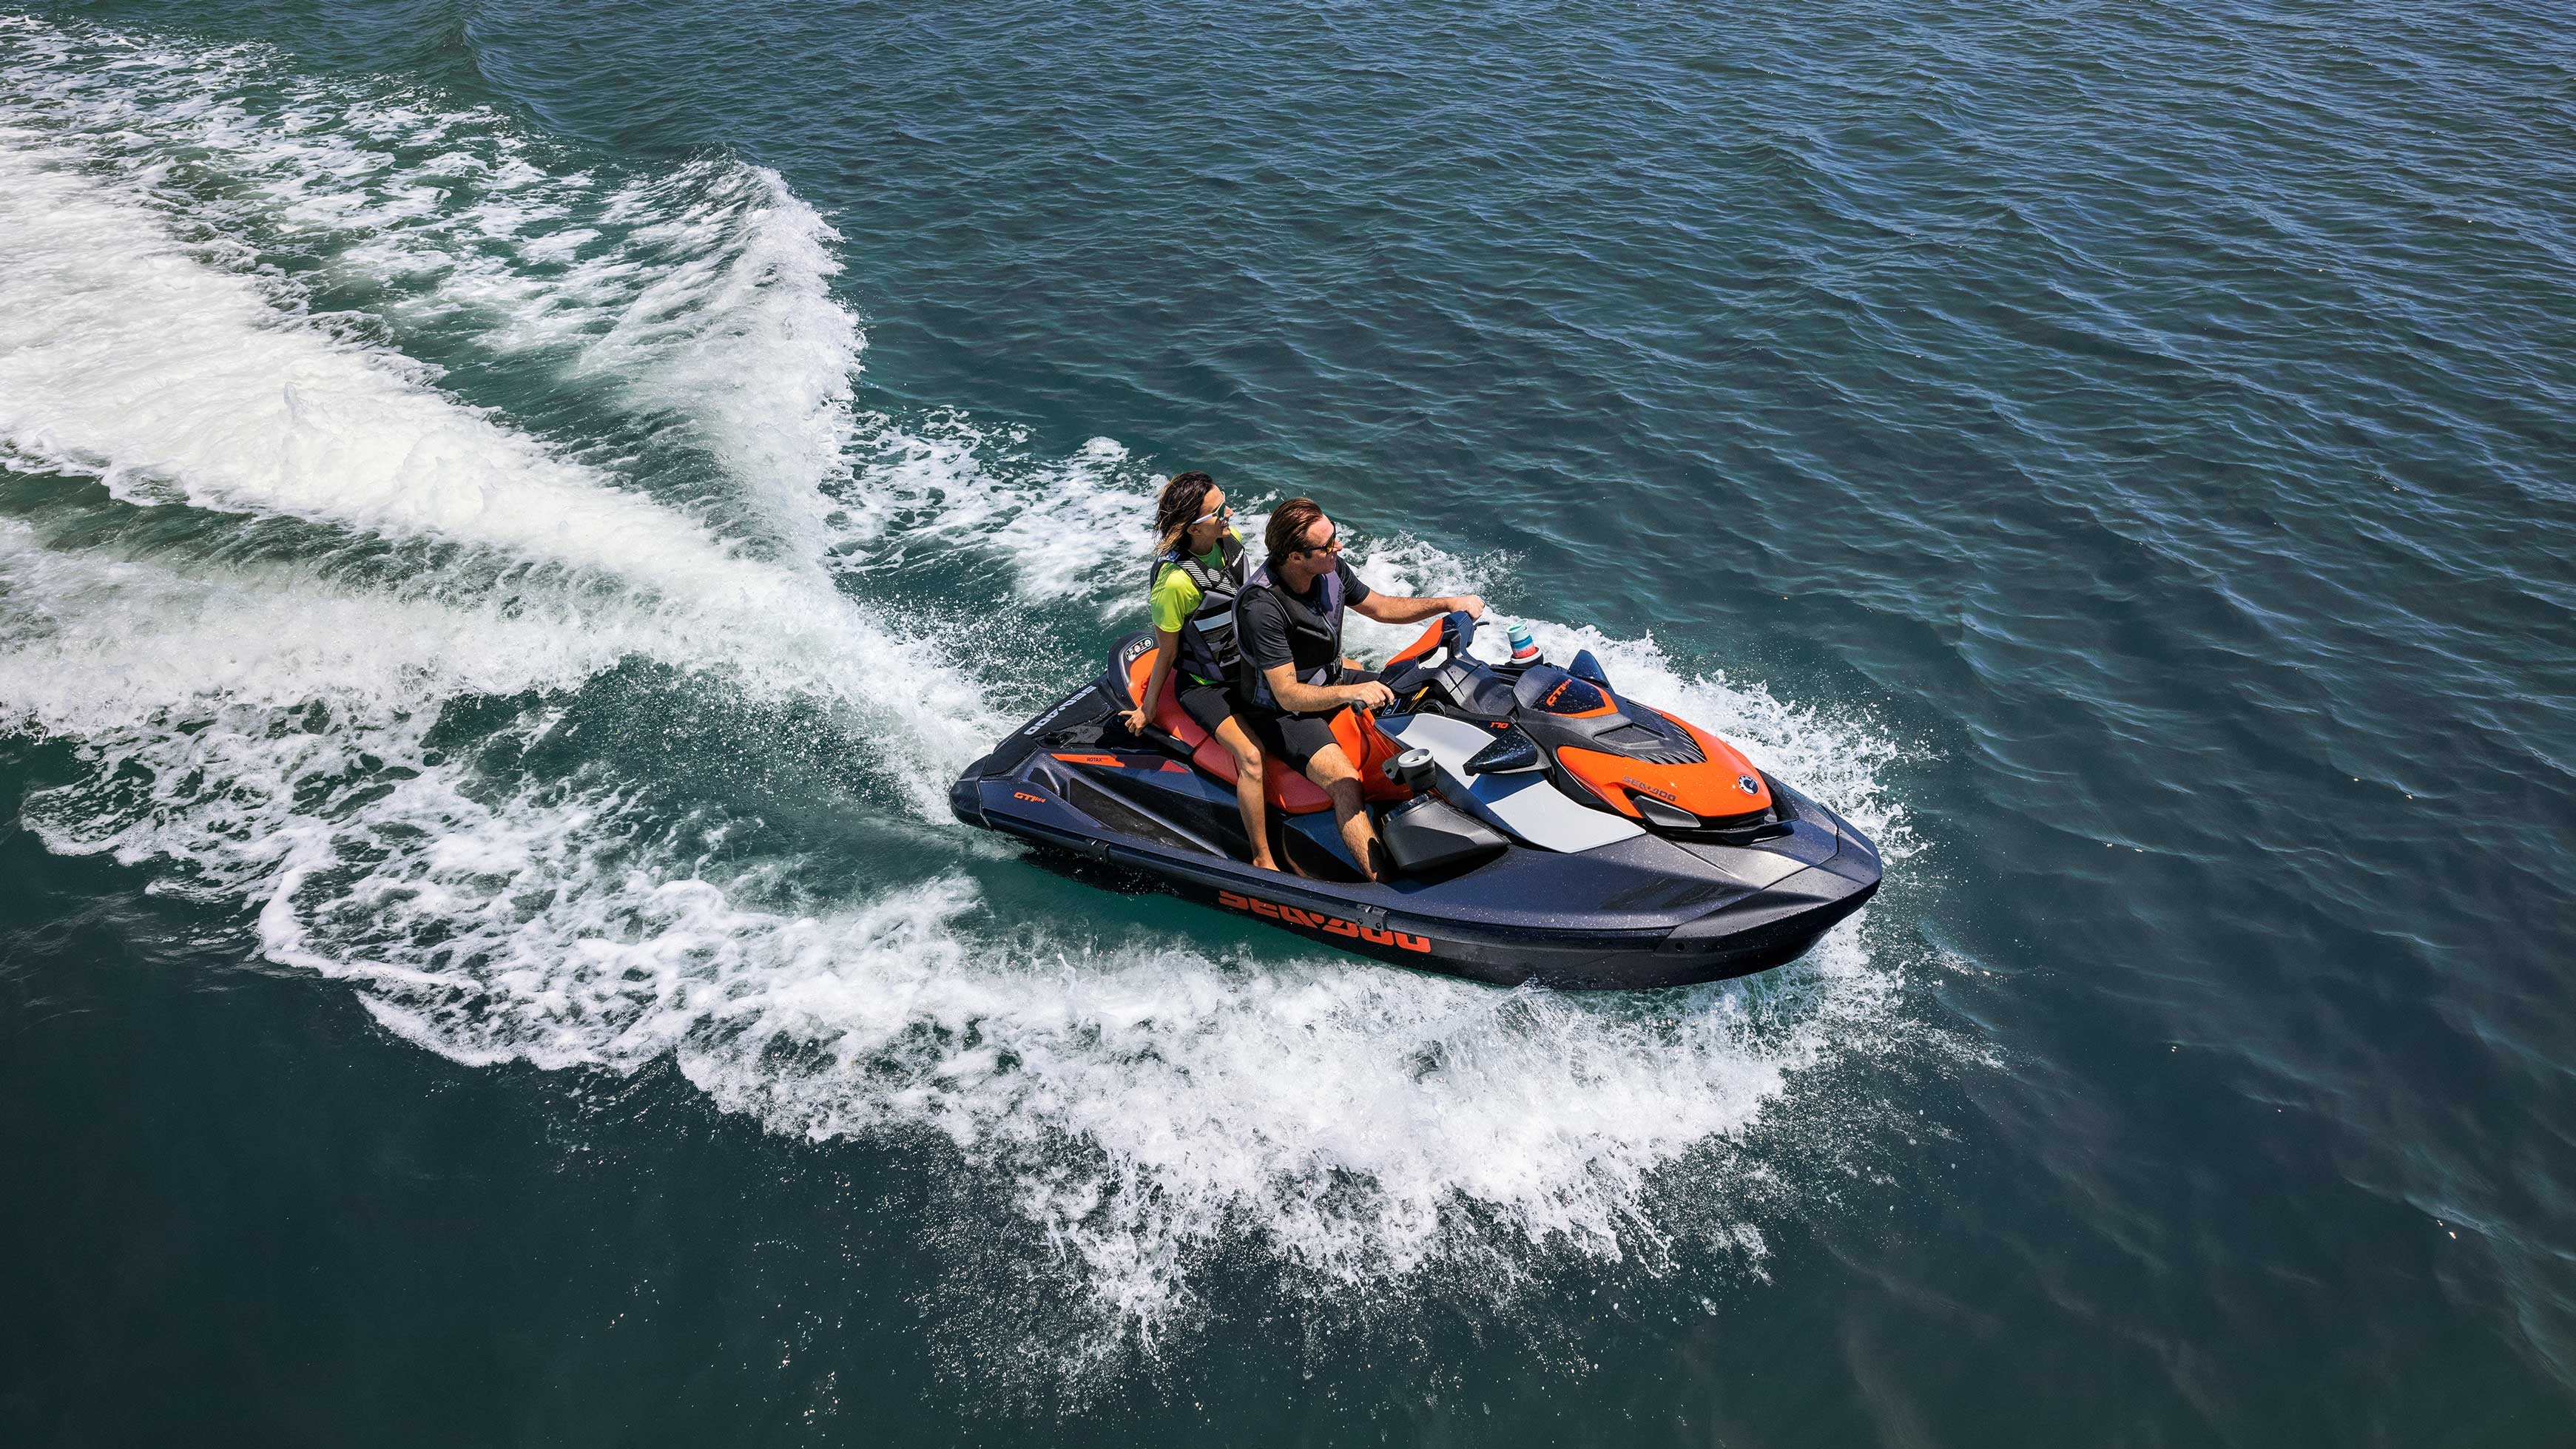 2022 Sea-Doo GTI SE, Recreation watercraft, Personal adventure, Fun on the water, 3490x1960 HD Desktop